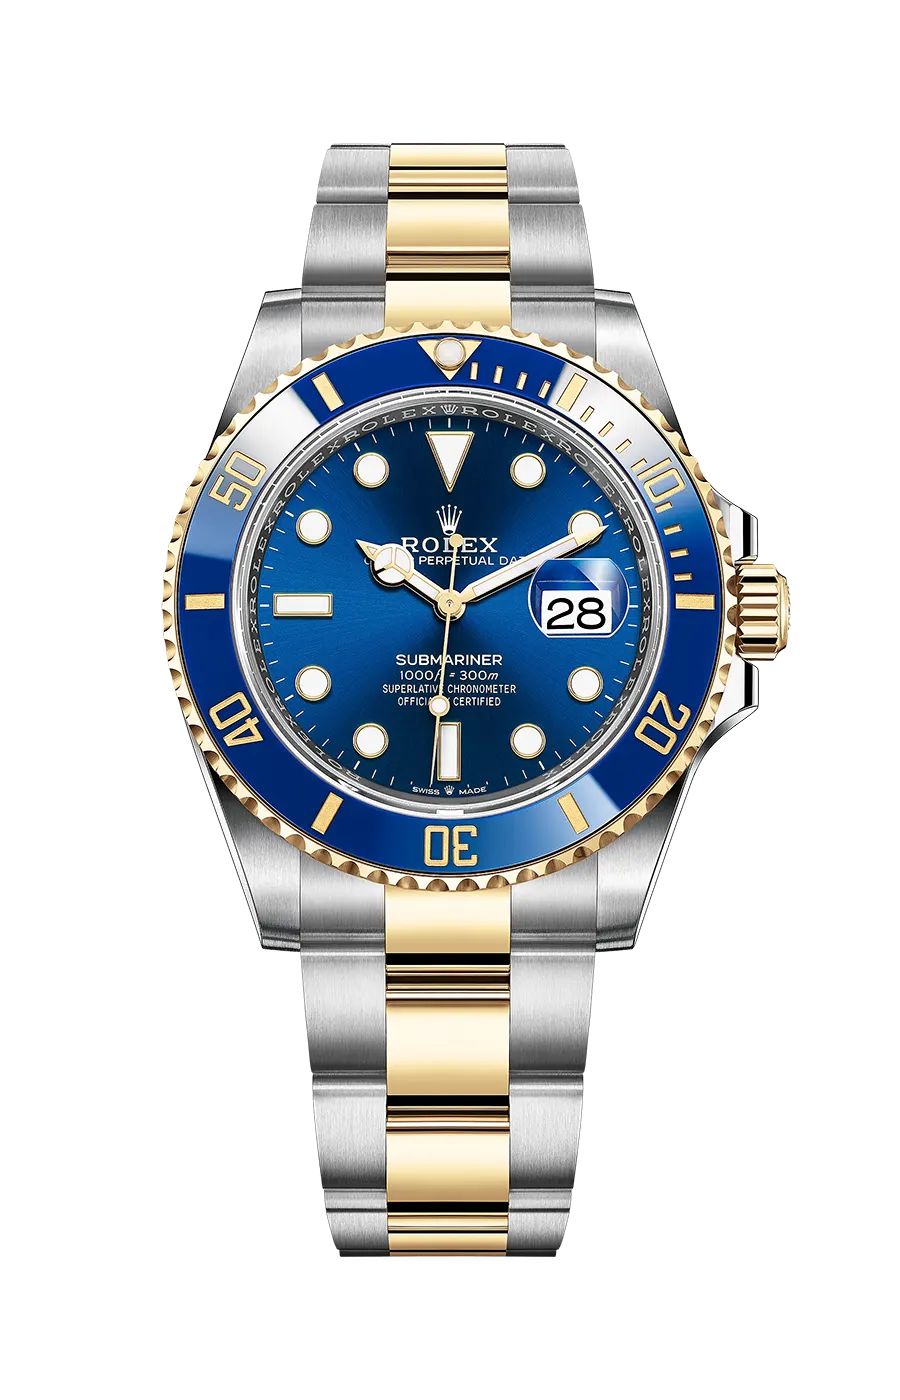 Rolex Submariner Replica 126613LB 2 Tone Blue Watches